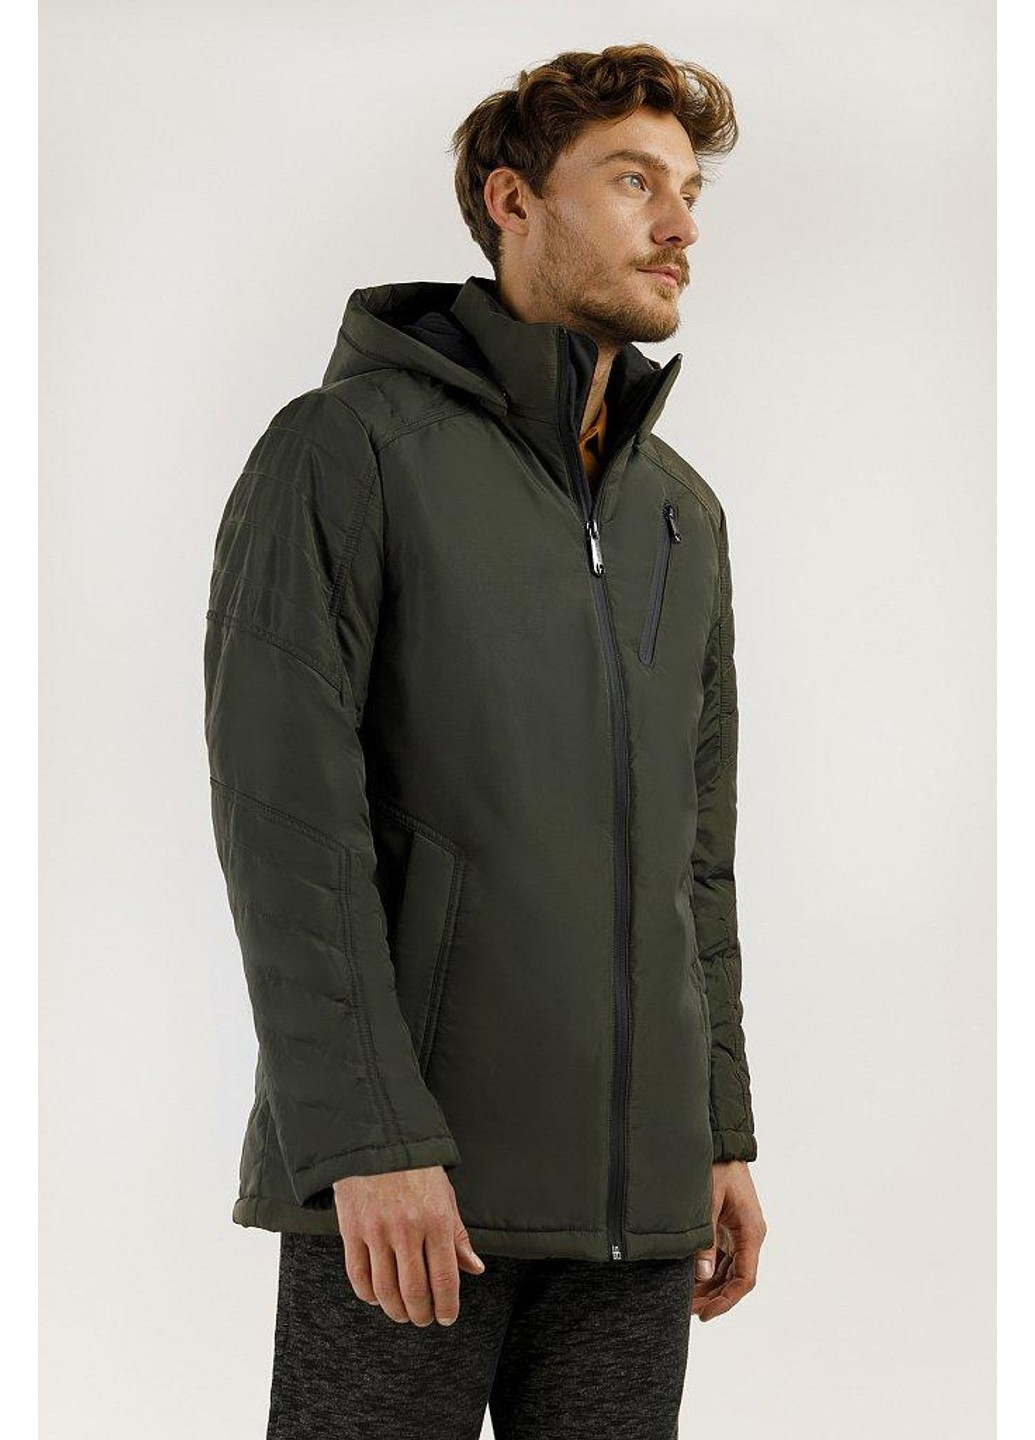 Зеленая демисезонная куртка a19-21004-905 Finn Flare